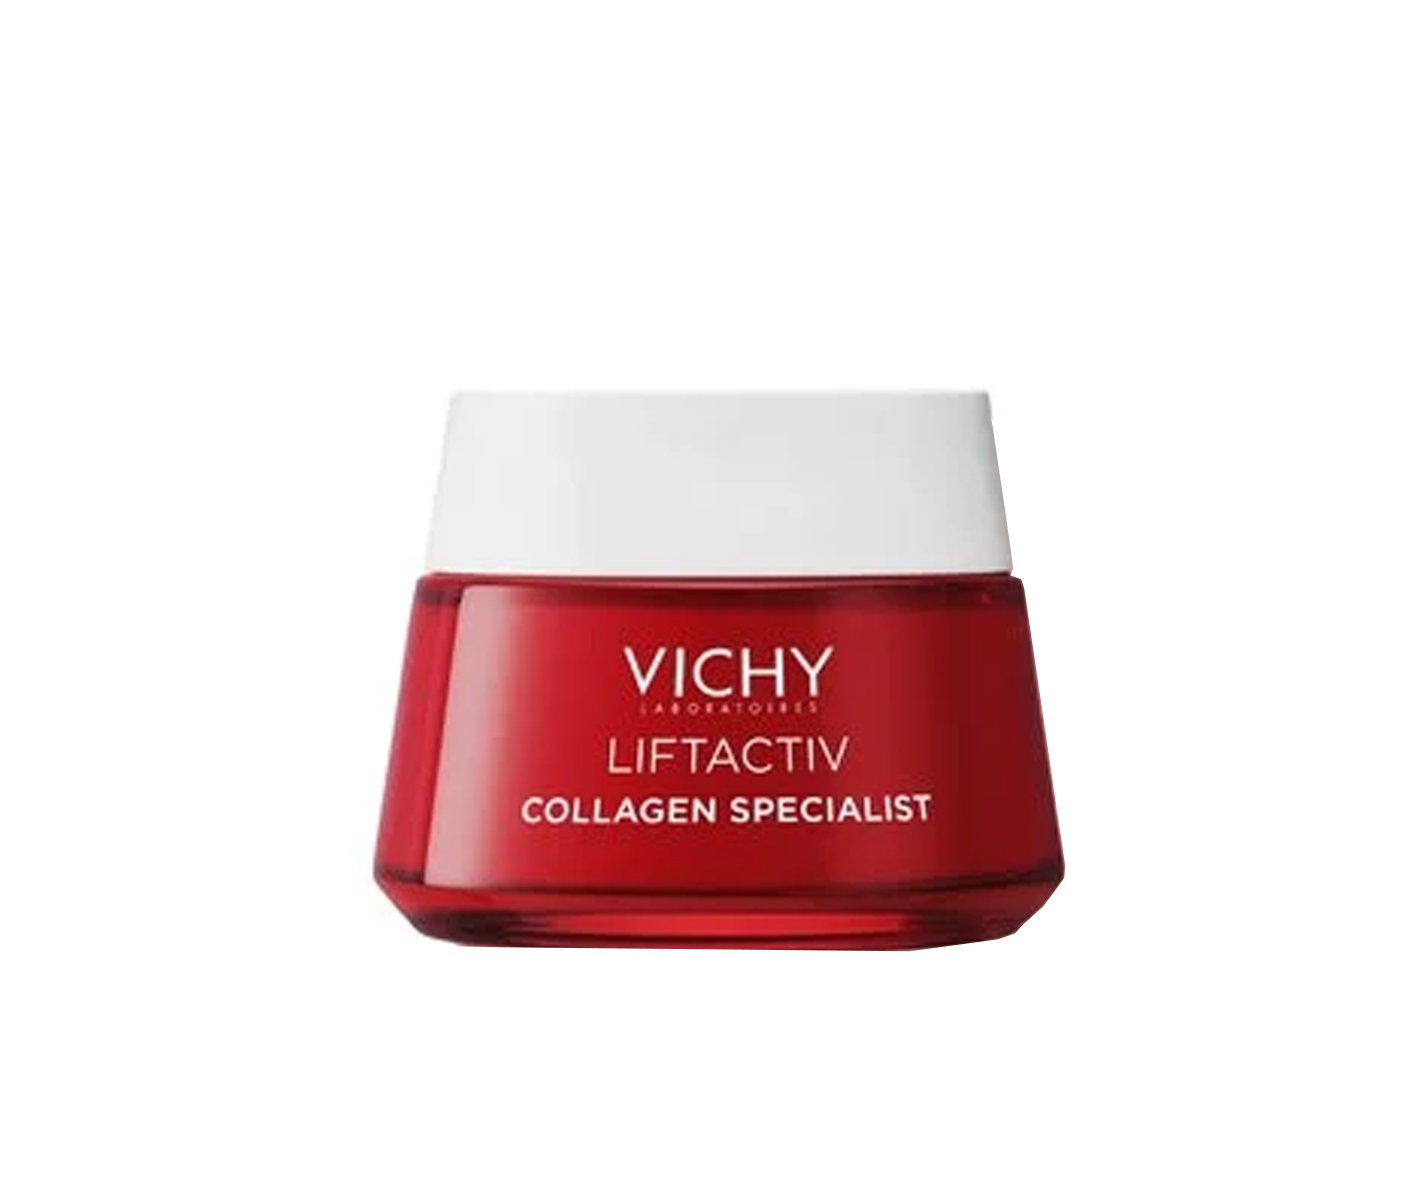 Vichy, Liftactiv Collagen Specialist, krem na dzień